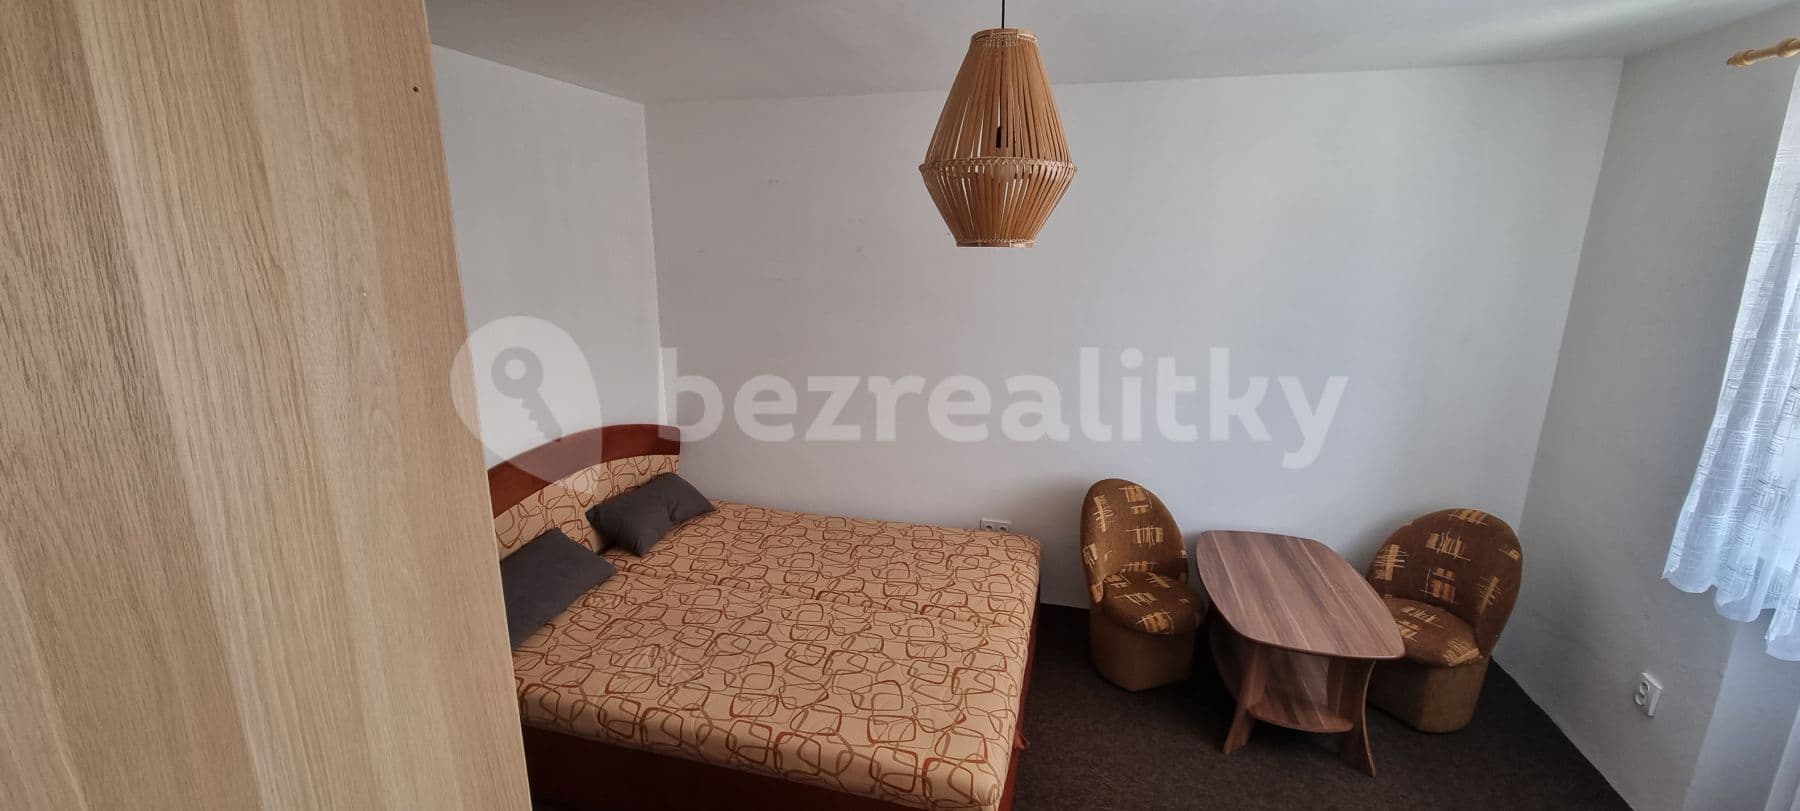 Pronájem bytu 1+1 28 m², Chelčického, Blansko, Jihomoravský kraj